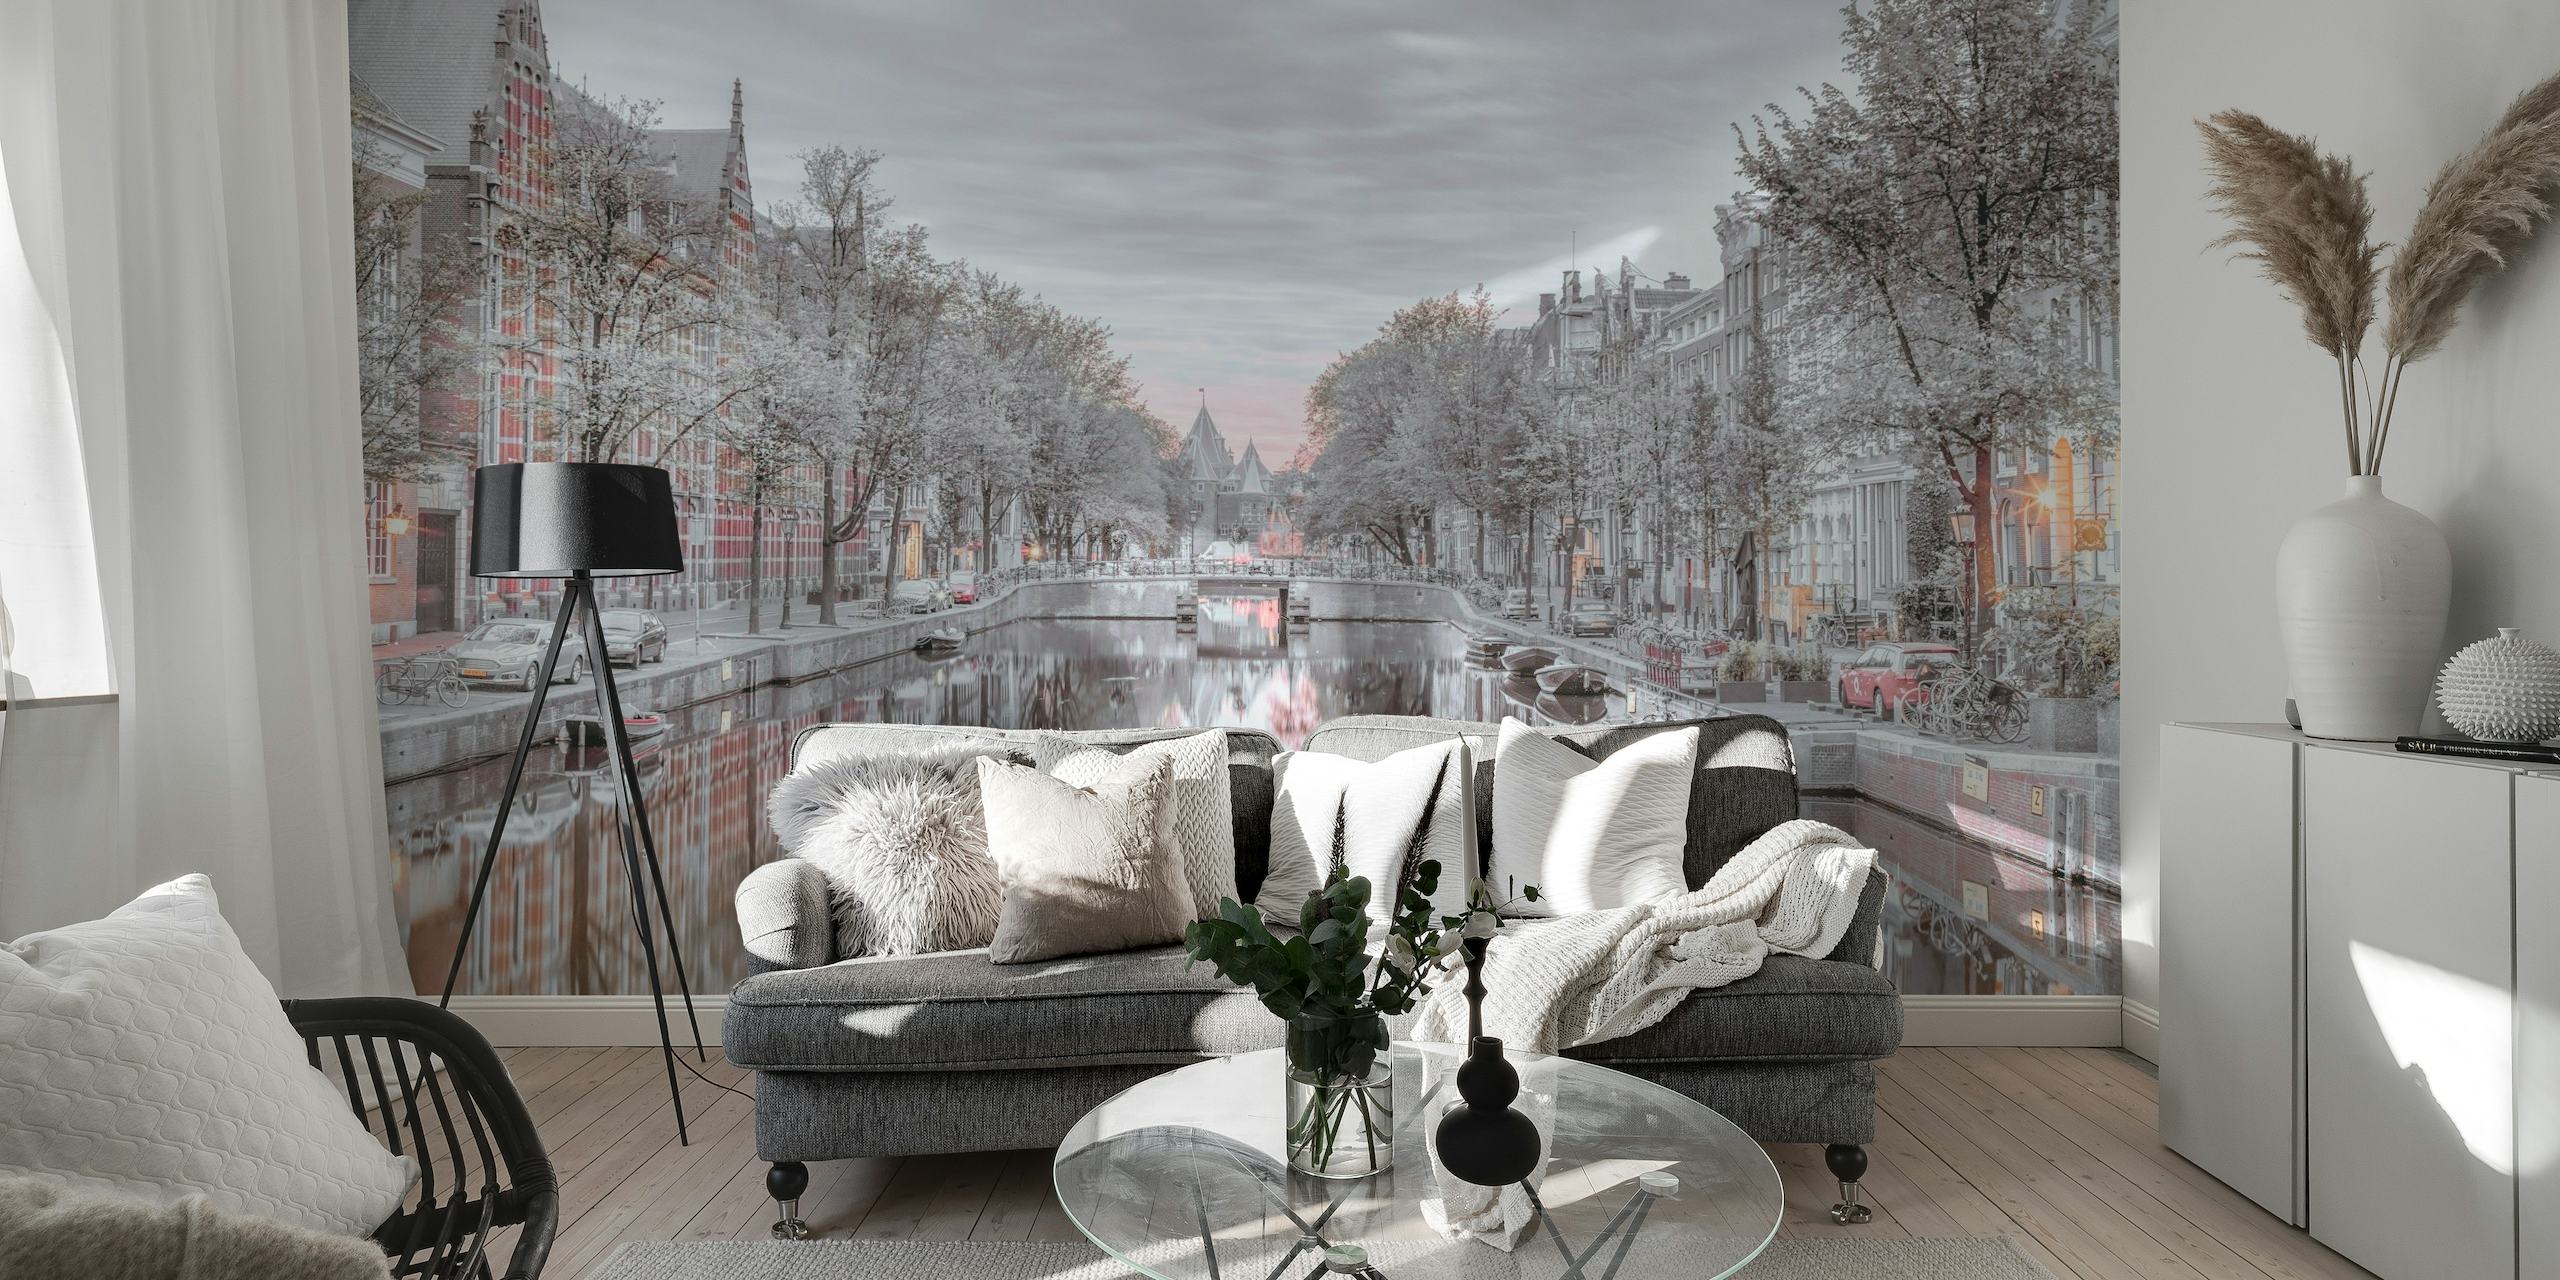 Charming Amsterdam Canal behang